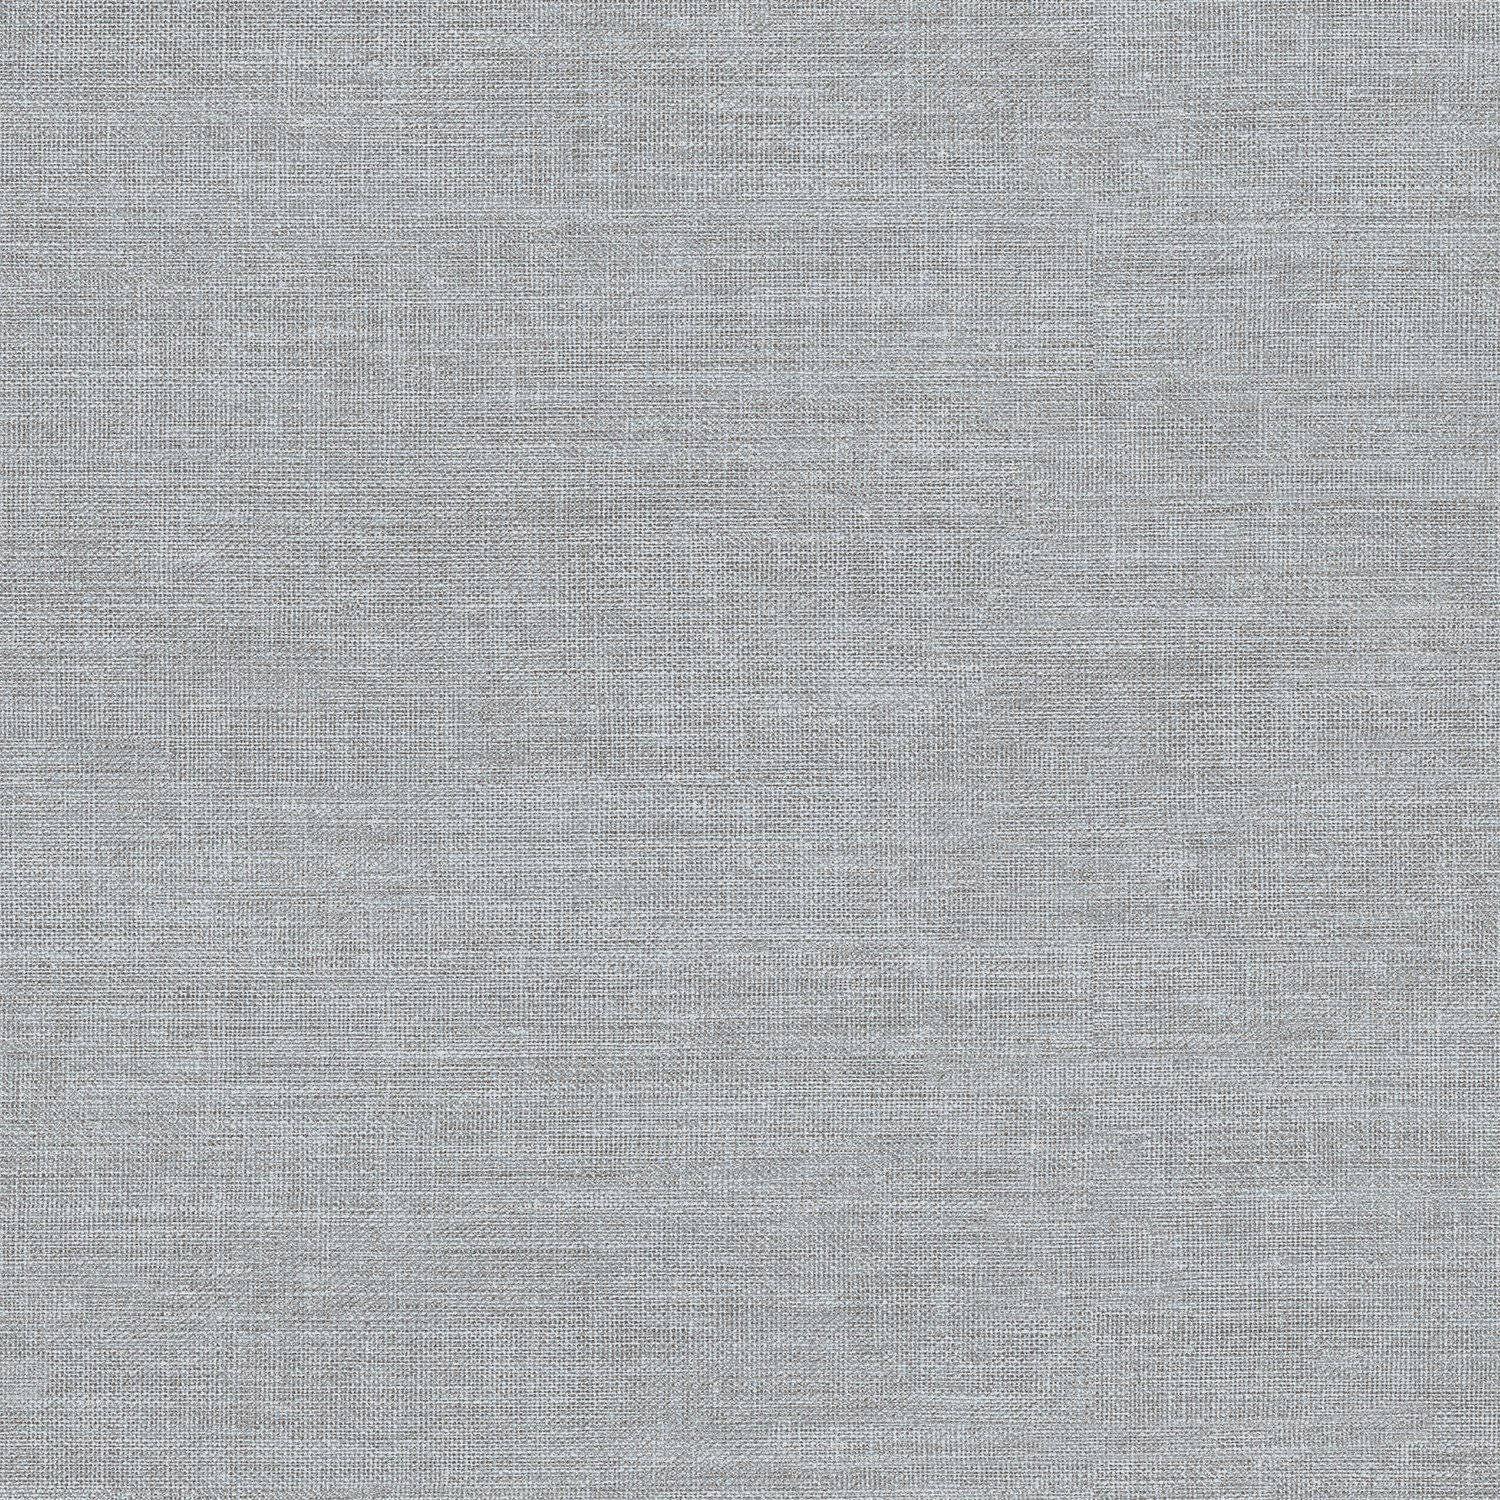 Textured Gray Background Wallpaper